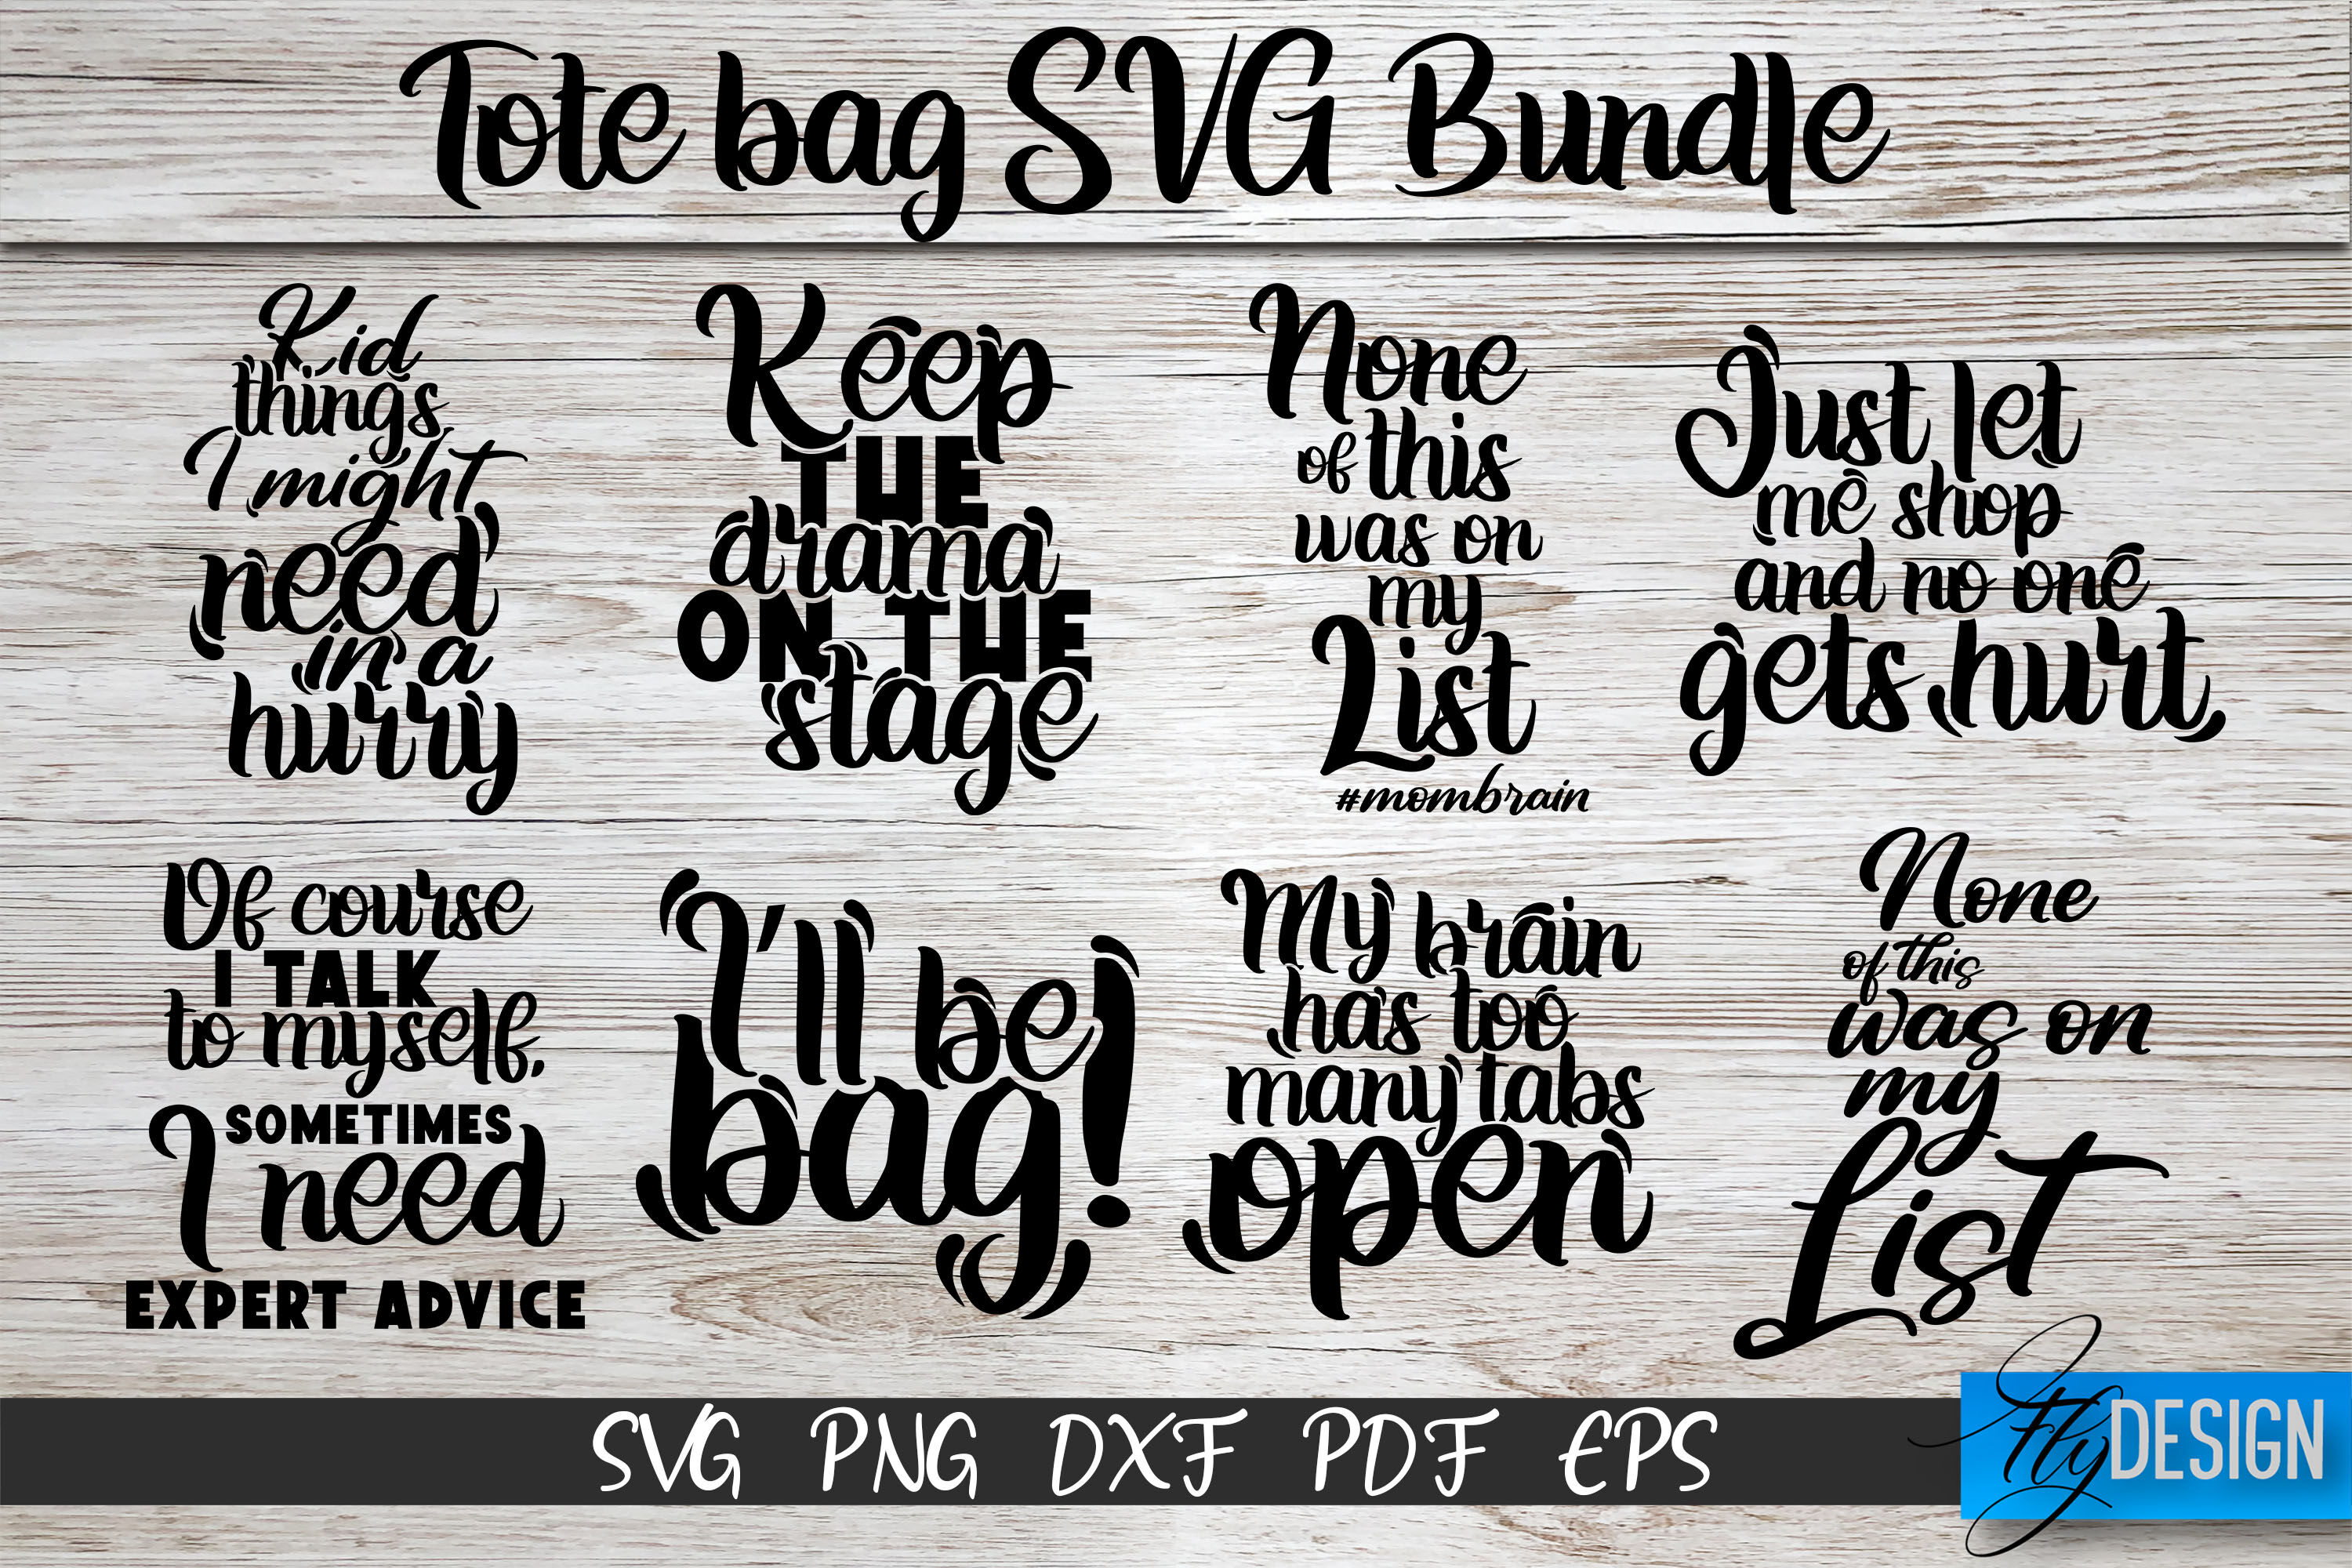 Tote Bag Quotes SVG Design, Tote bag SVG